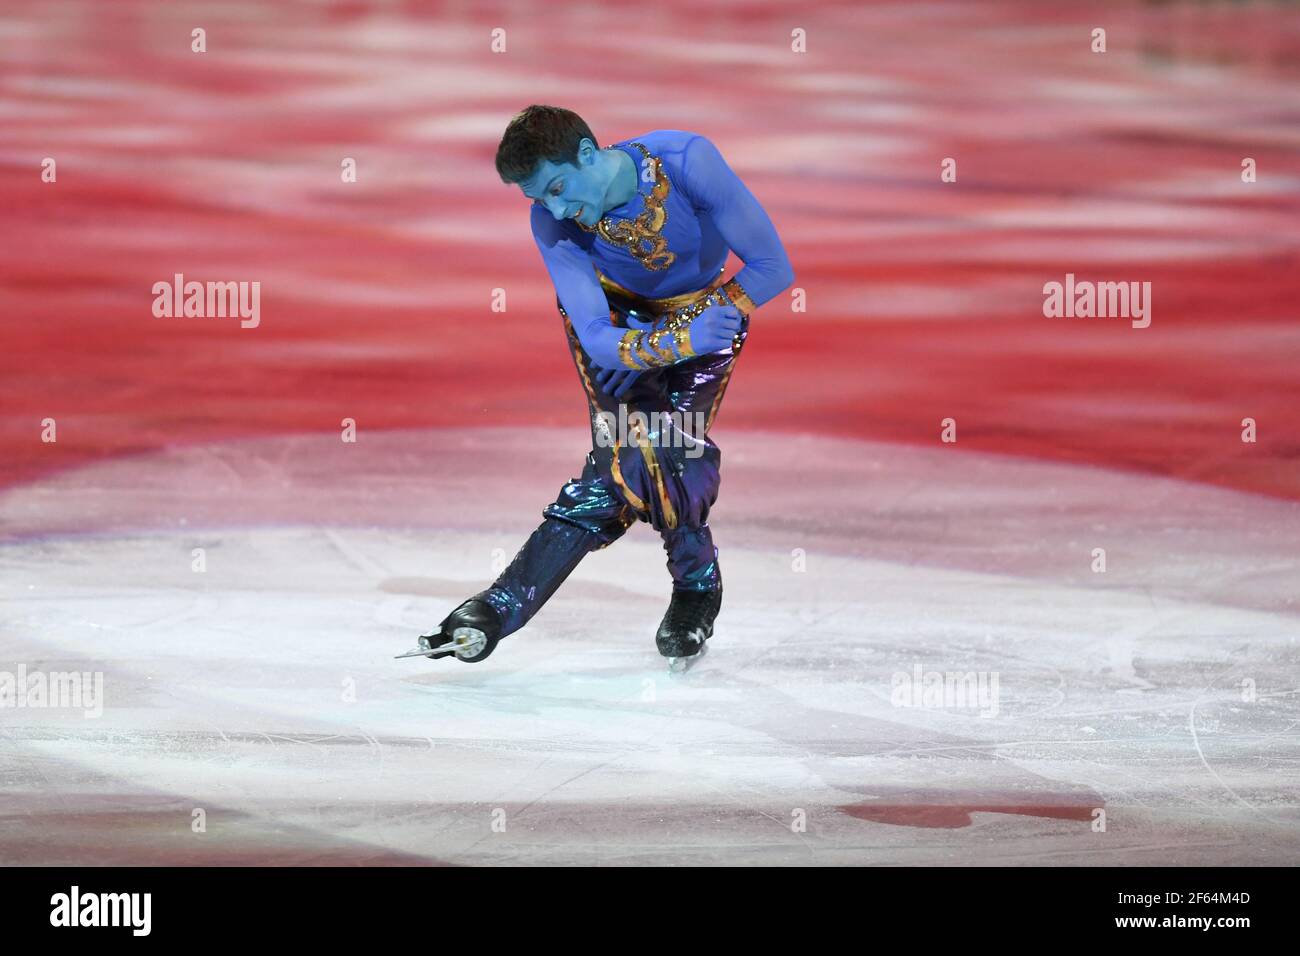 Morisi KVITELASHVILI GEO, during the Exhibition Gala at the ISU World Figure Skating Championships 2021 at Ericsson Globe, on March 28, 2021 in Stockholm, Sweden. (Photo by Raniero Corbelletti/AFLO) Stock Photo